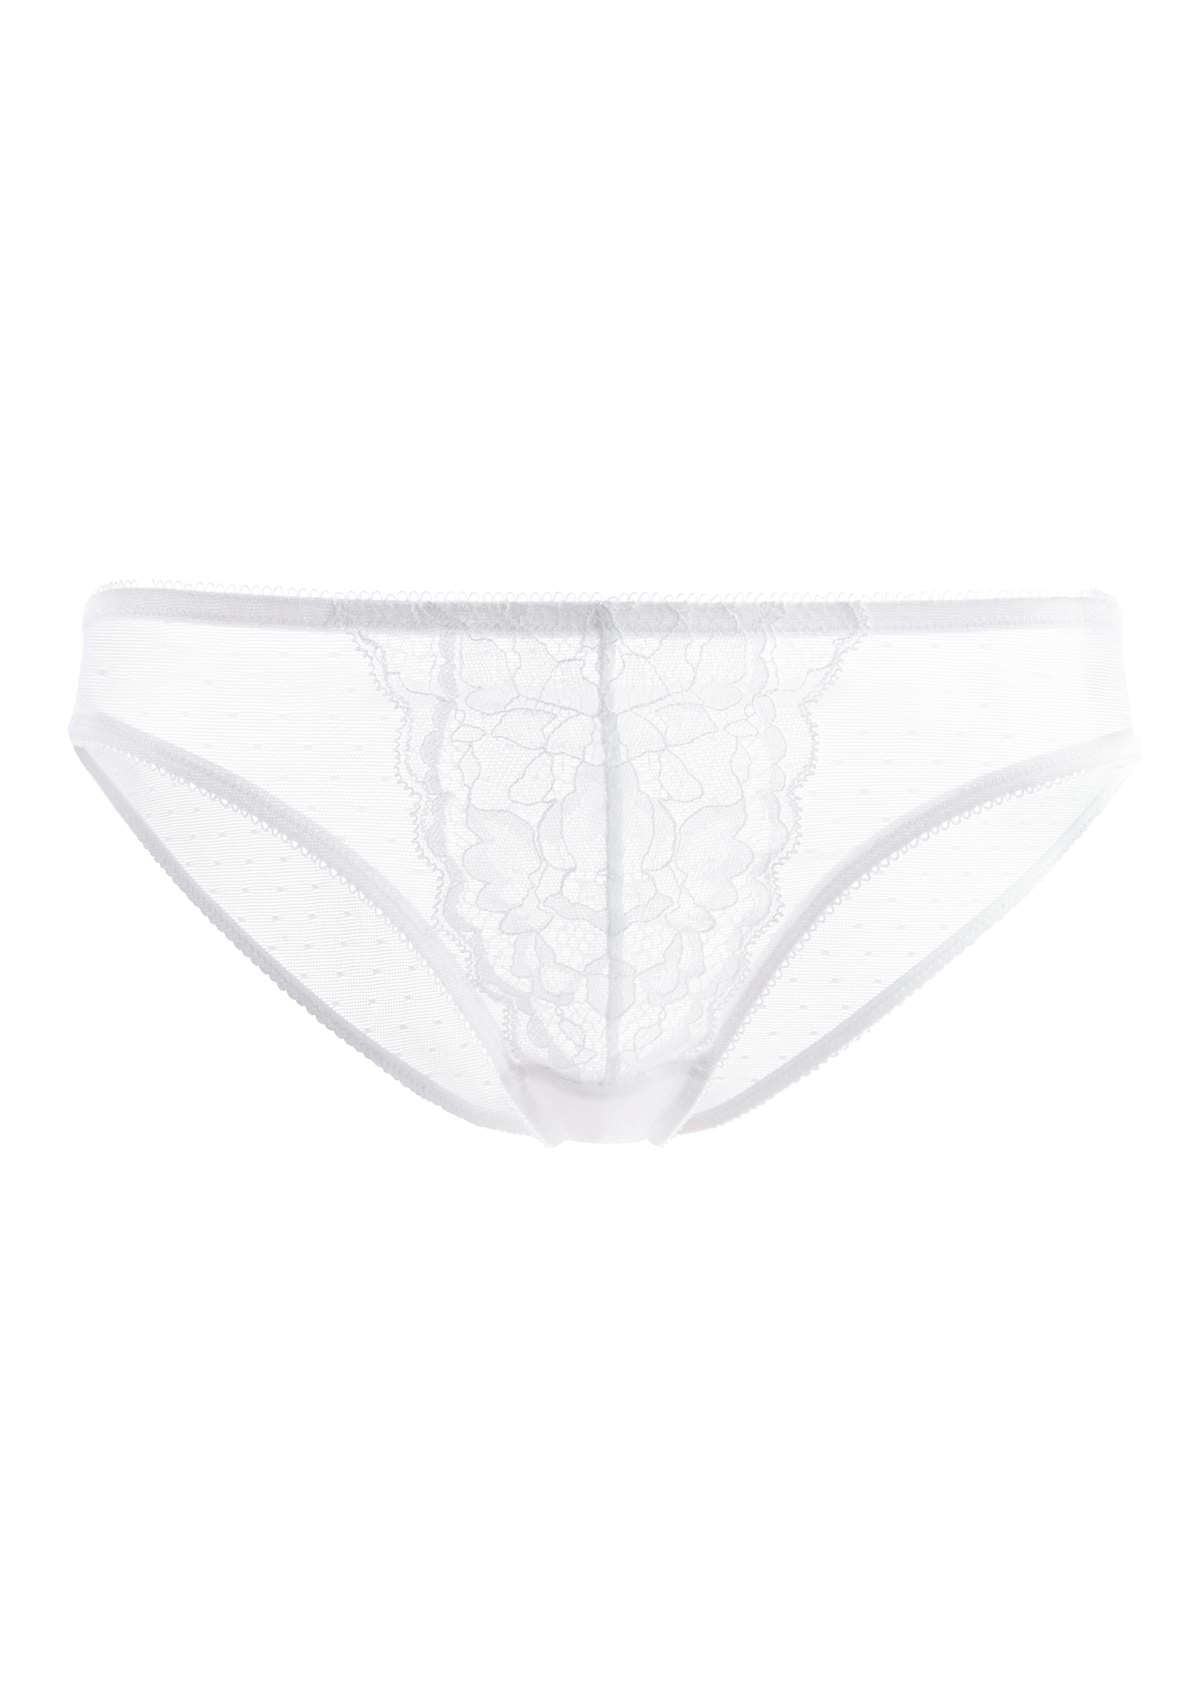 HSIA Enchante Mid-Rise Sheer Comfortable Trendy Lace Floral Mesh Pantie - XXXL / White / Bikini